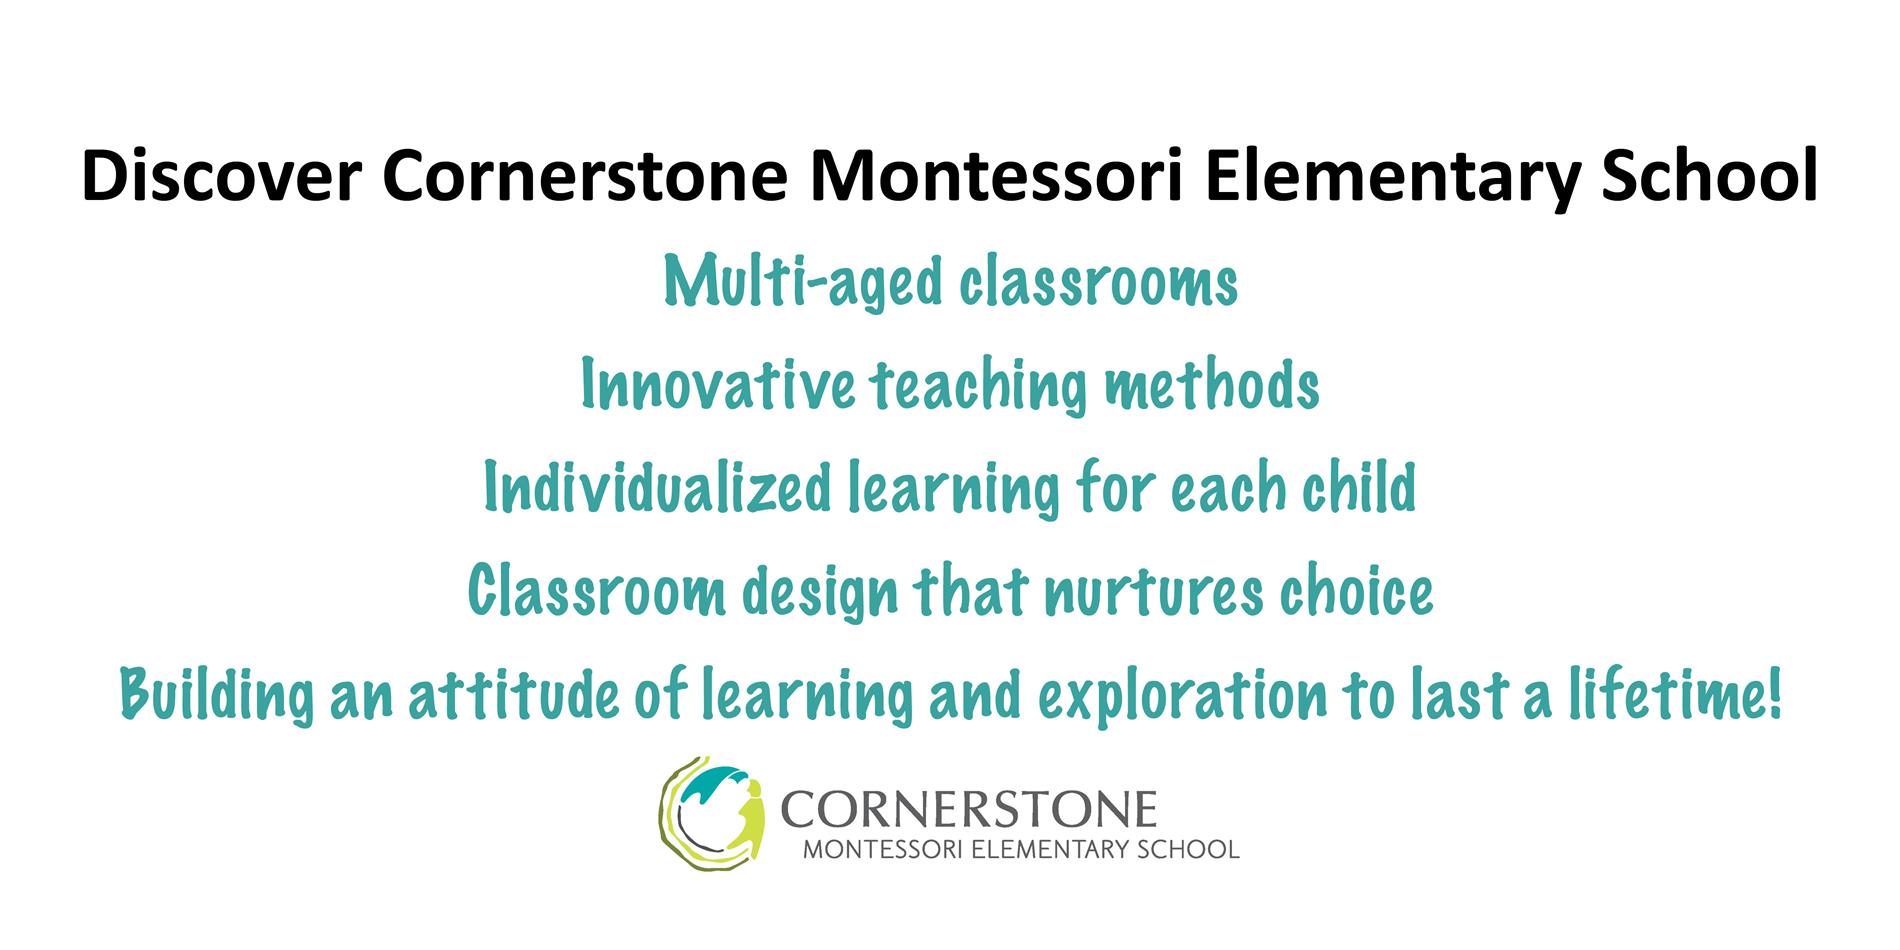 Discover Cornerstone Montessori Elementary School